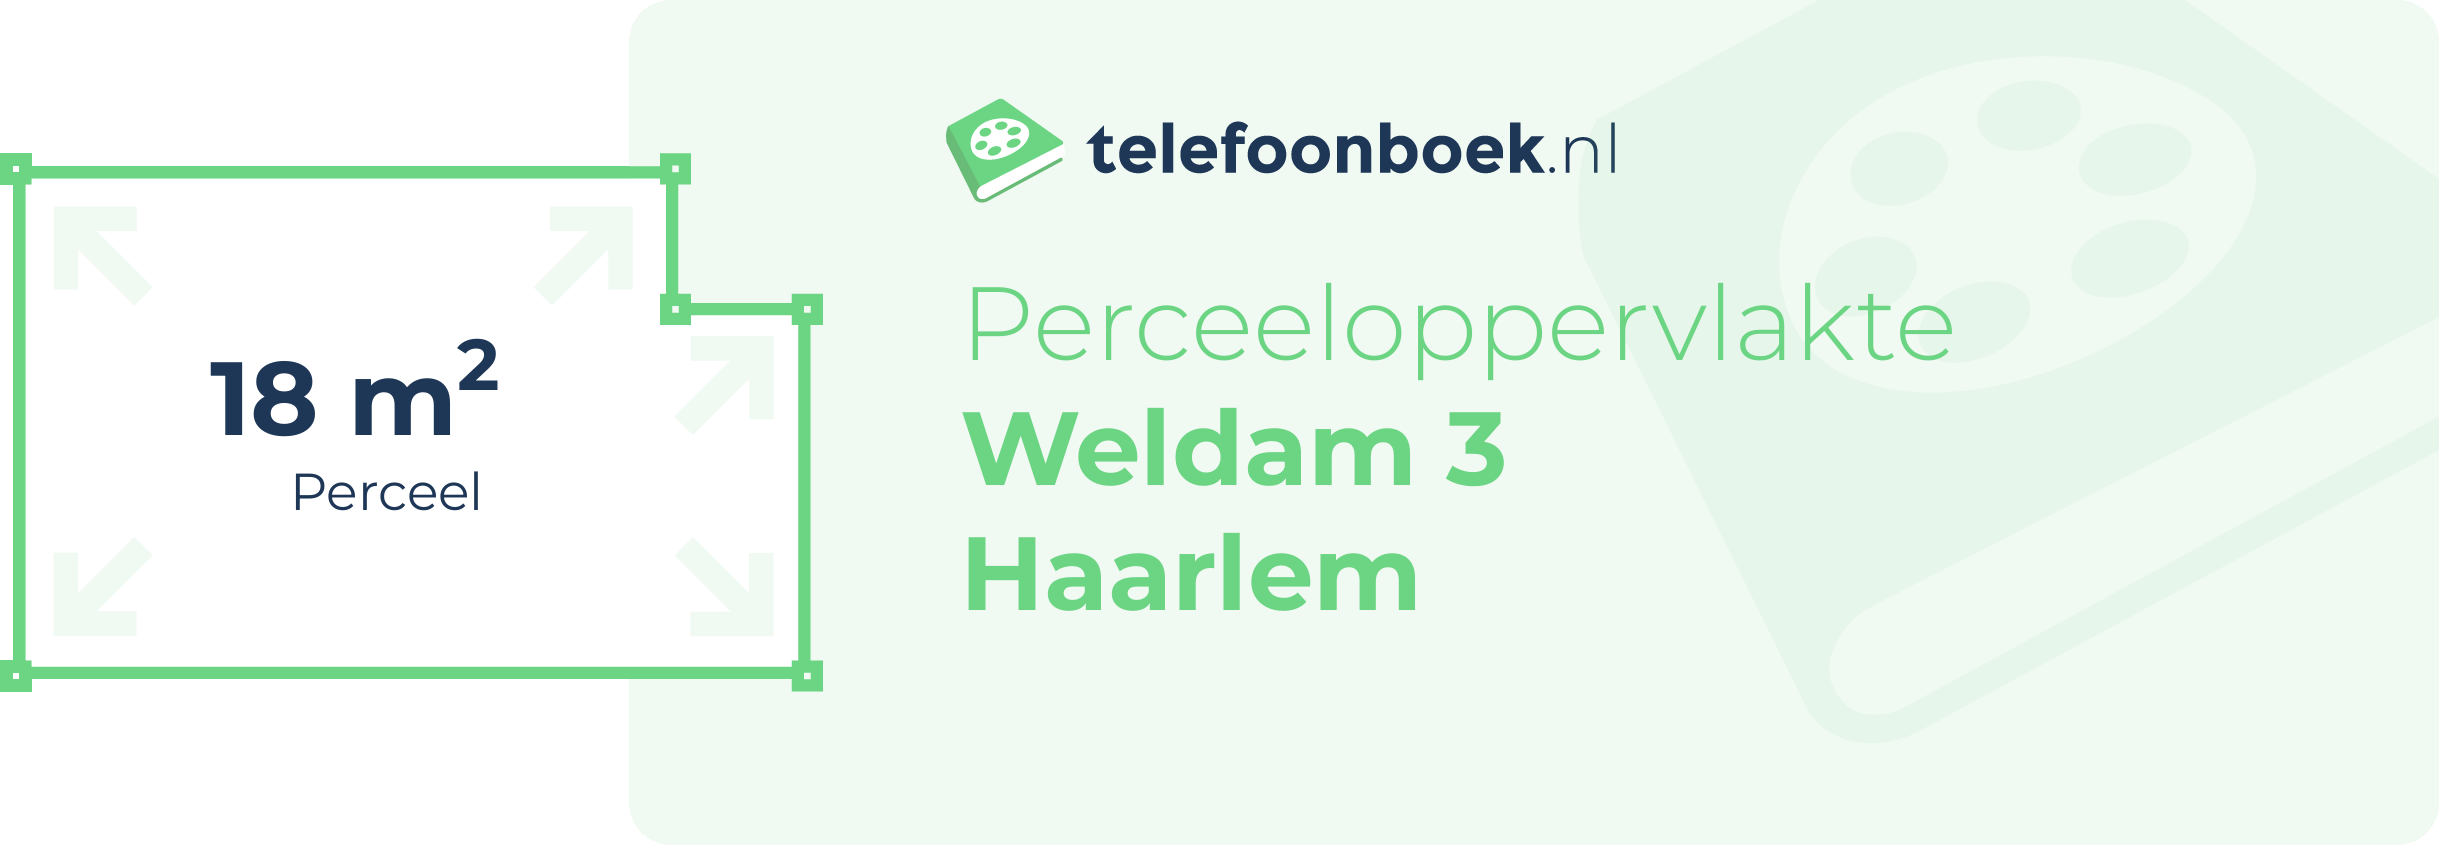 Perceeloppervlakte Weldam 3 Haarlem